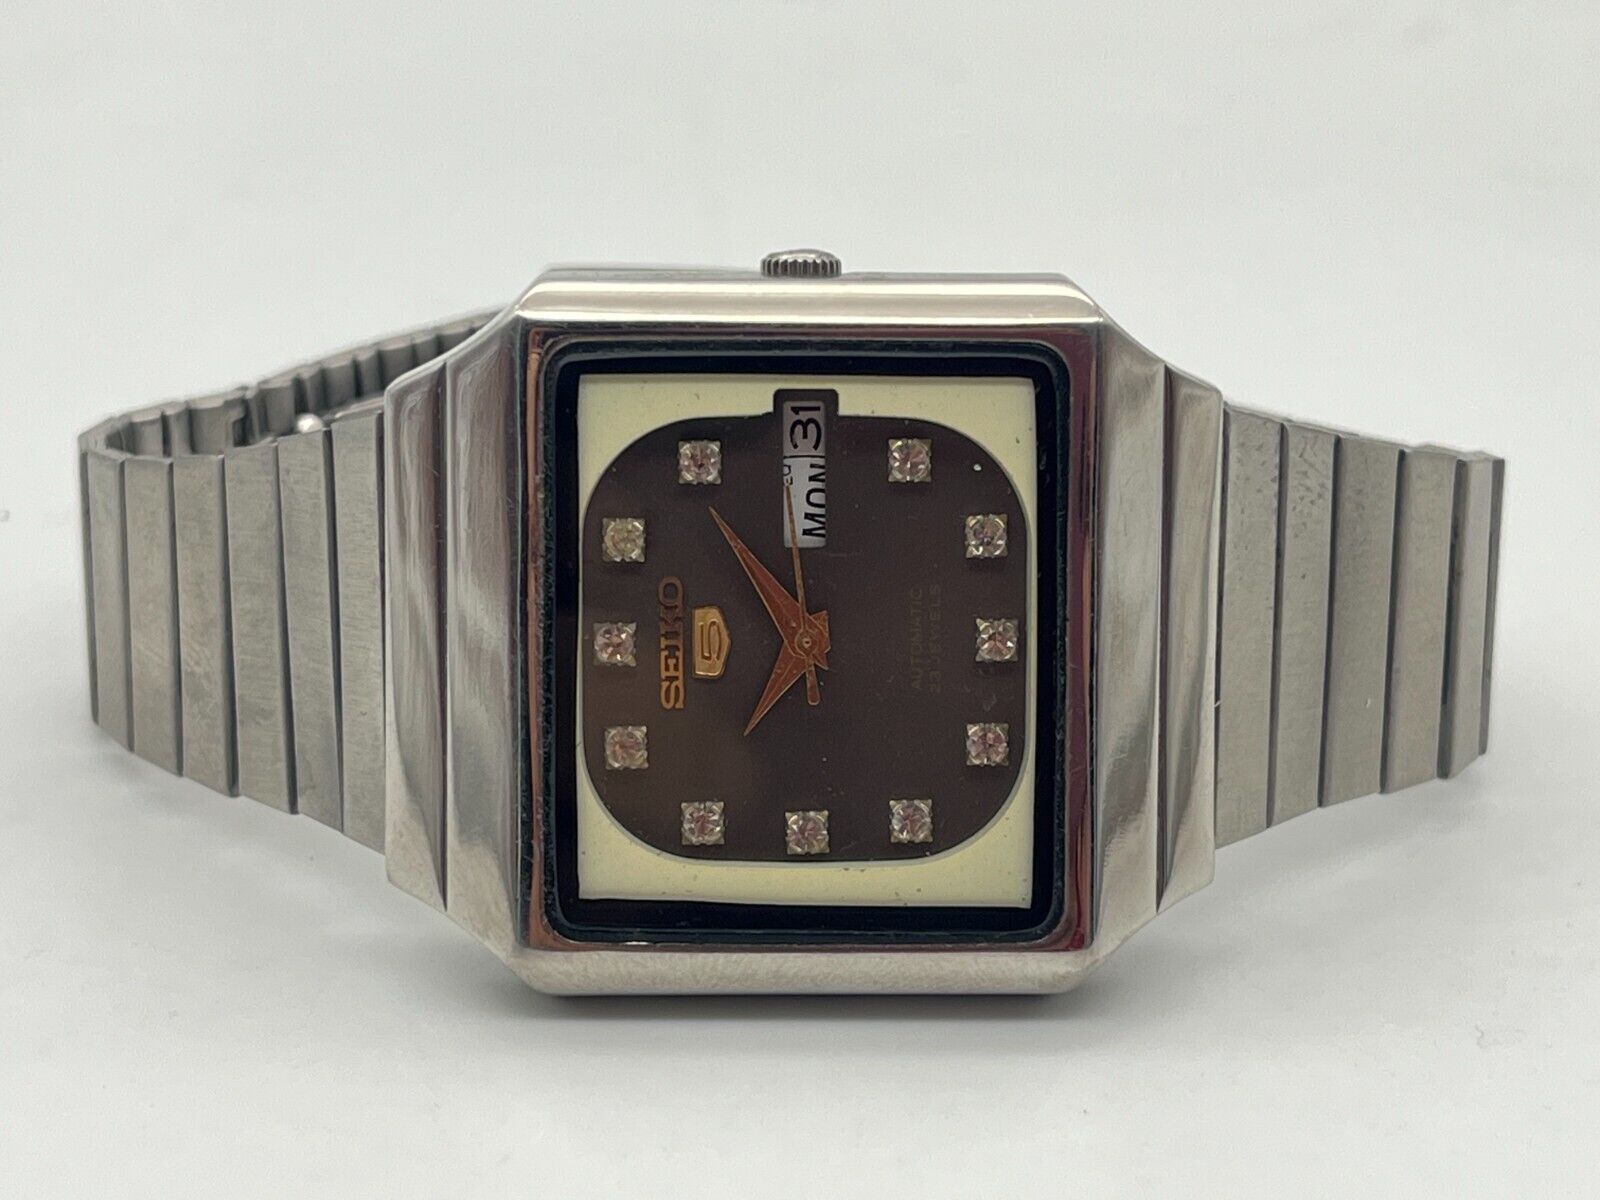 Vintage Seiko 5 Automatic Japan Made Men's Wrist Watch-Ref.6349-5470